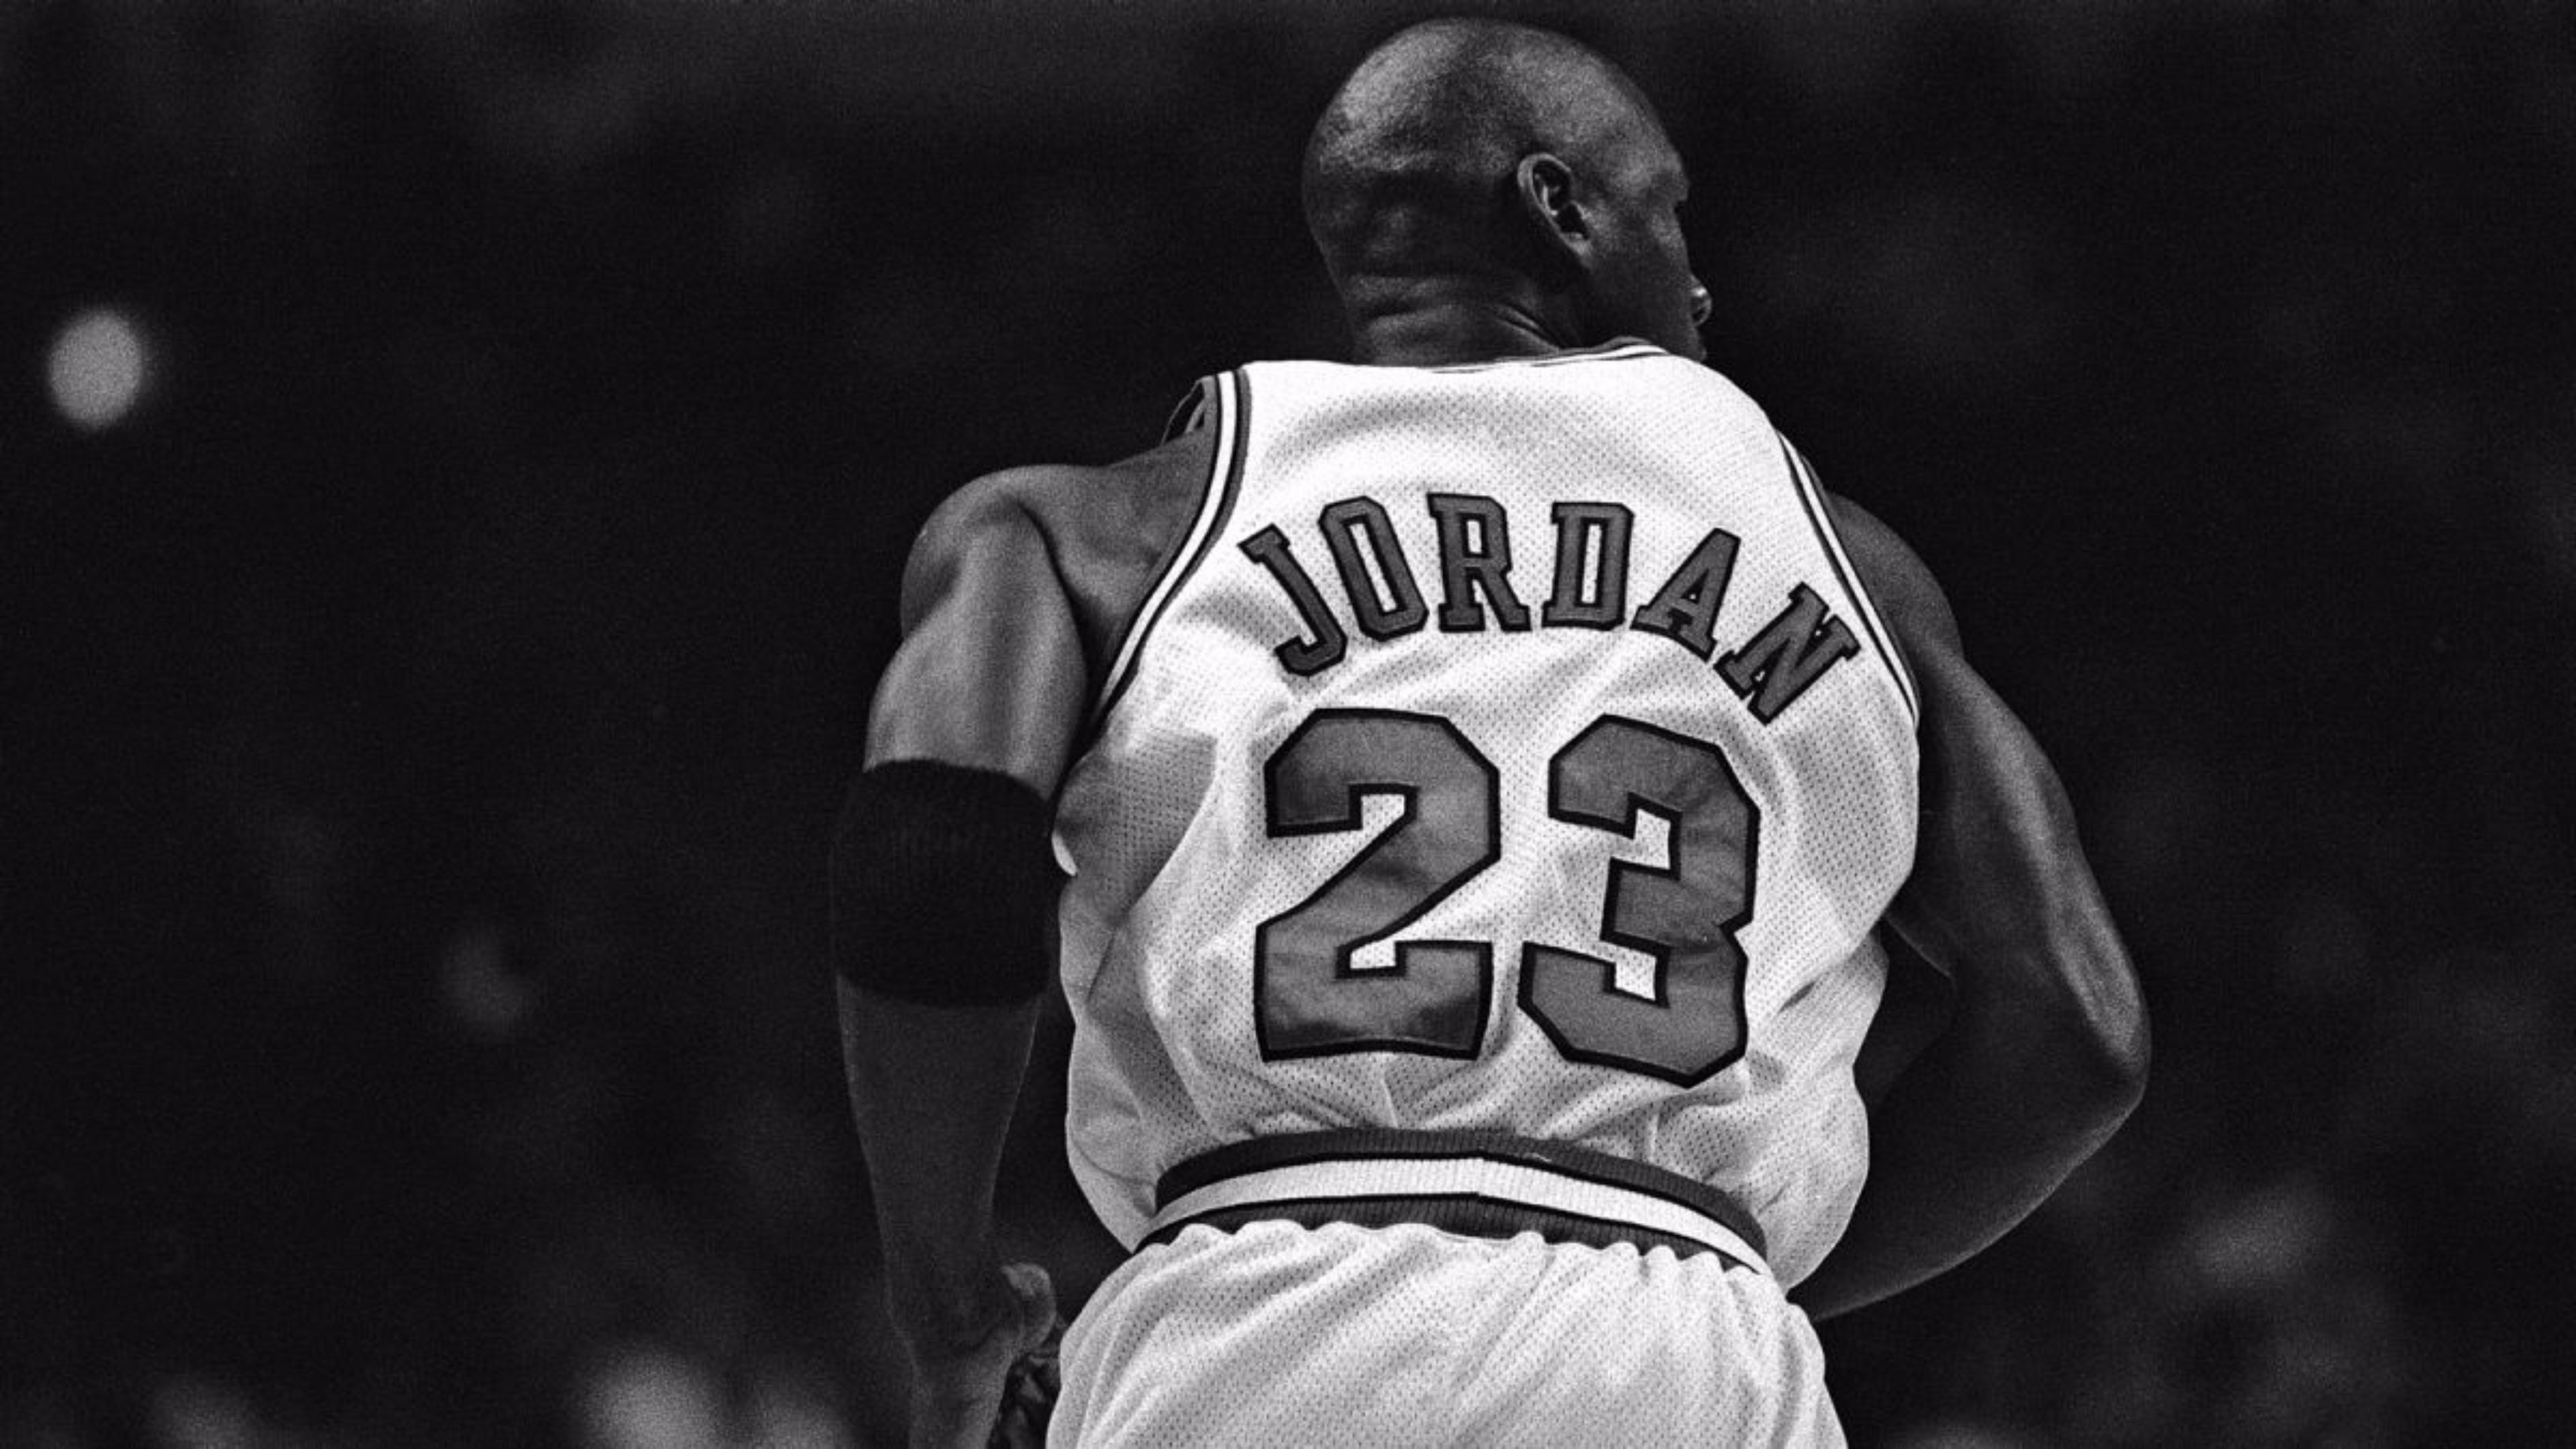 Michael Jordan Wallpaper Image Photos Pictures Background